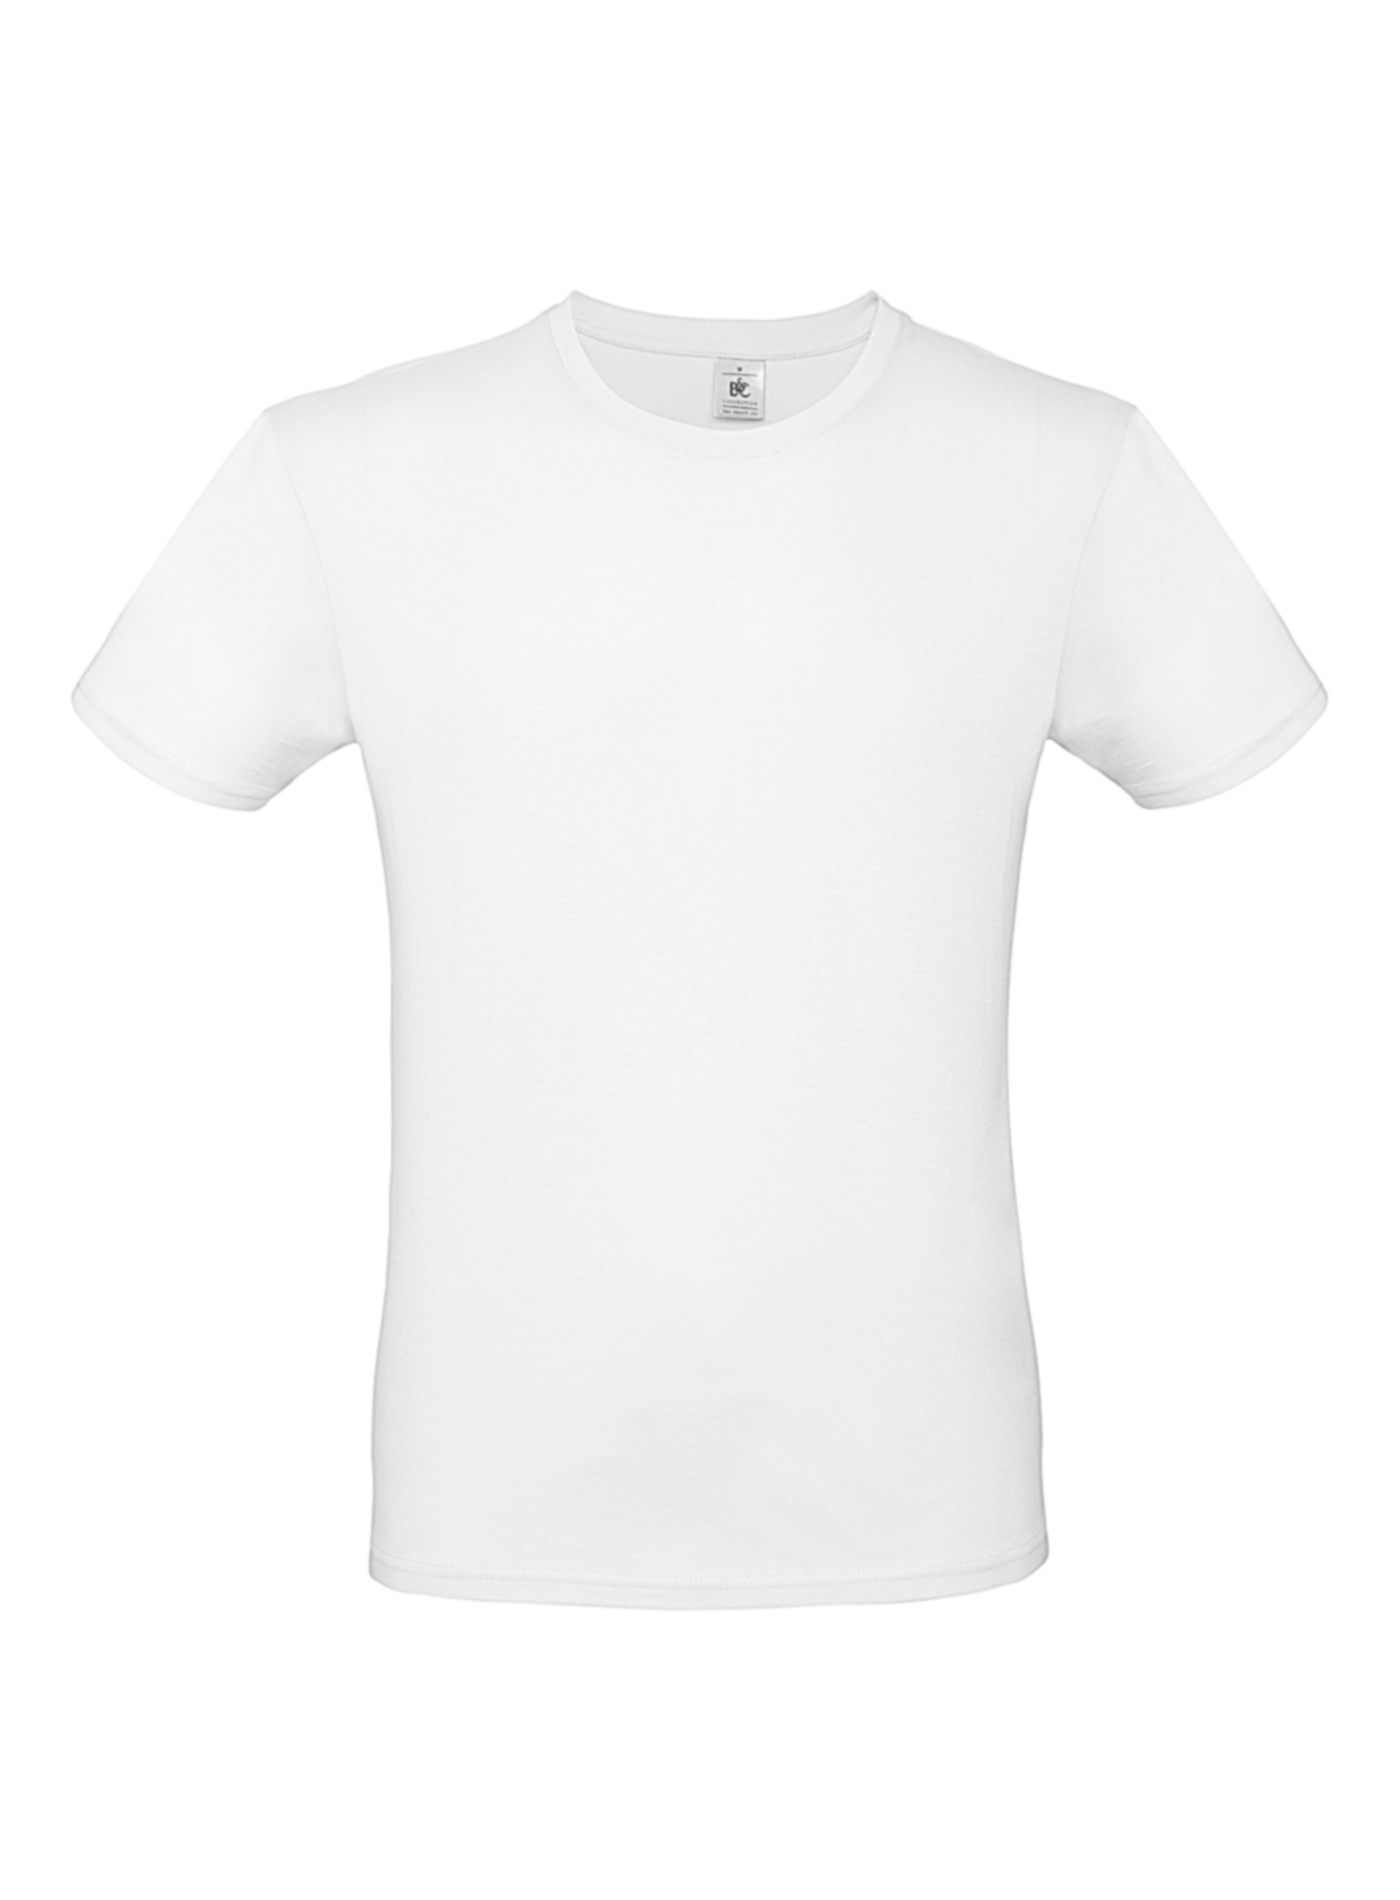 Pánské tričko B&C - Bílá XXL